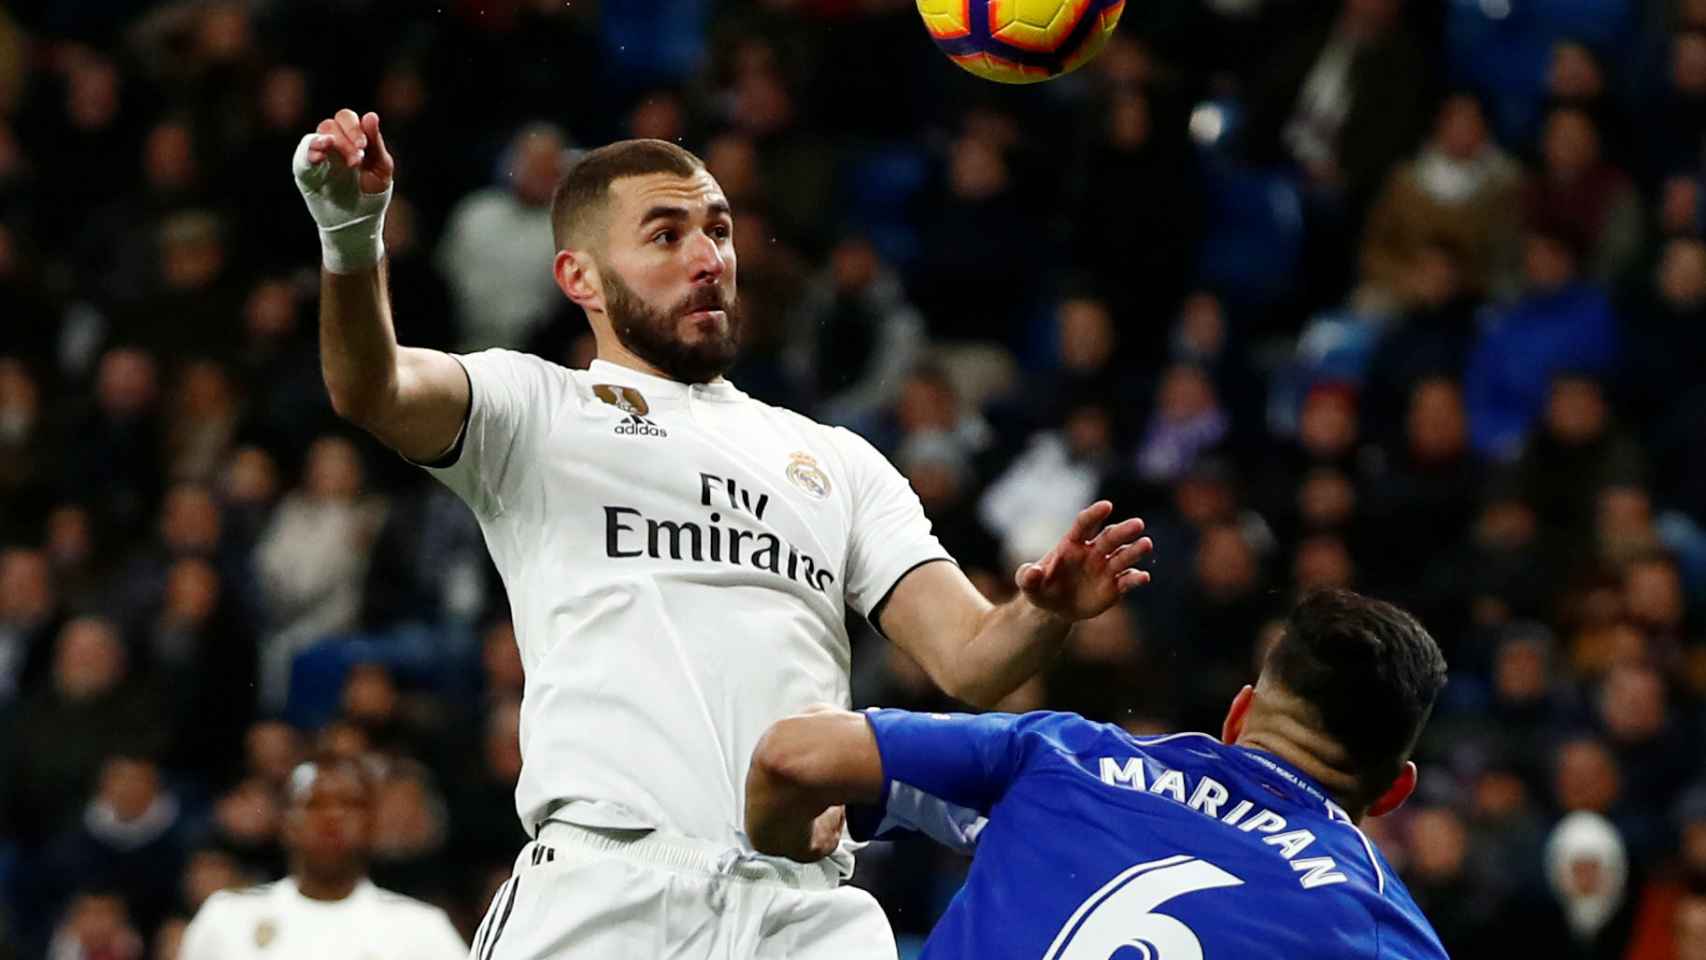 Benzema remata un balón frente a un jugador del Alavés